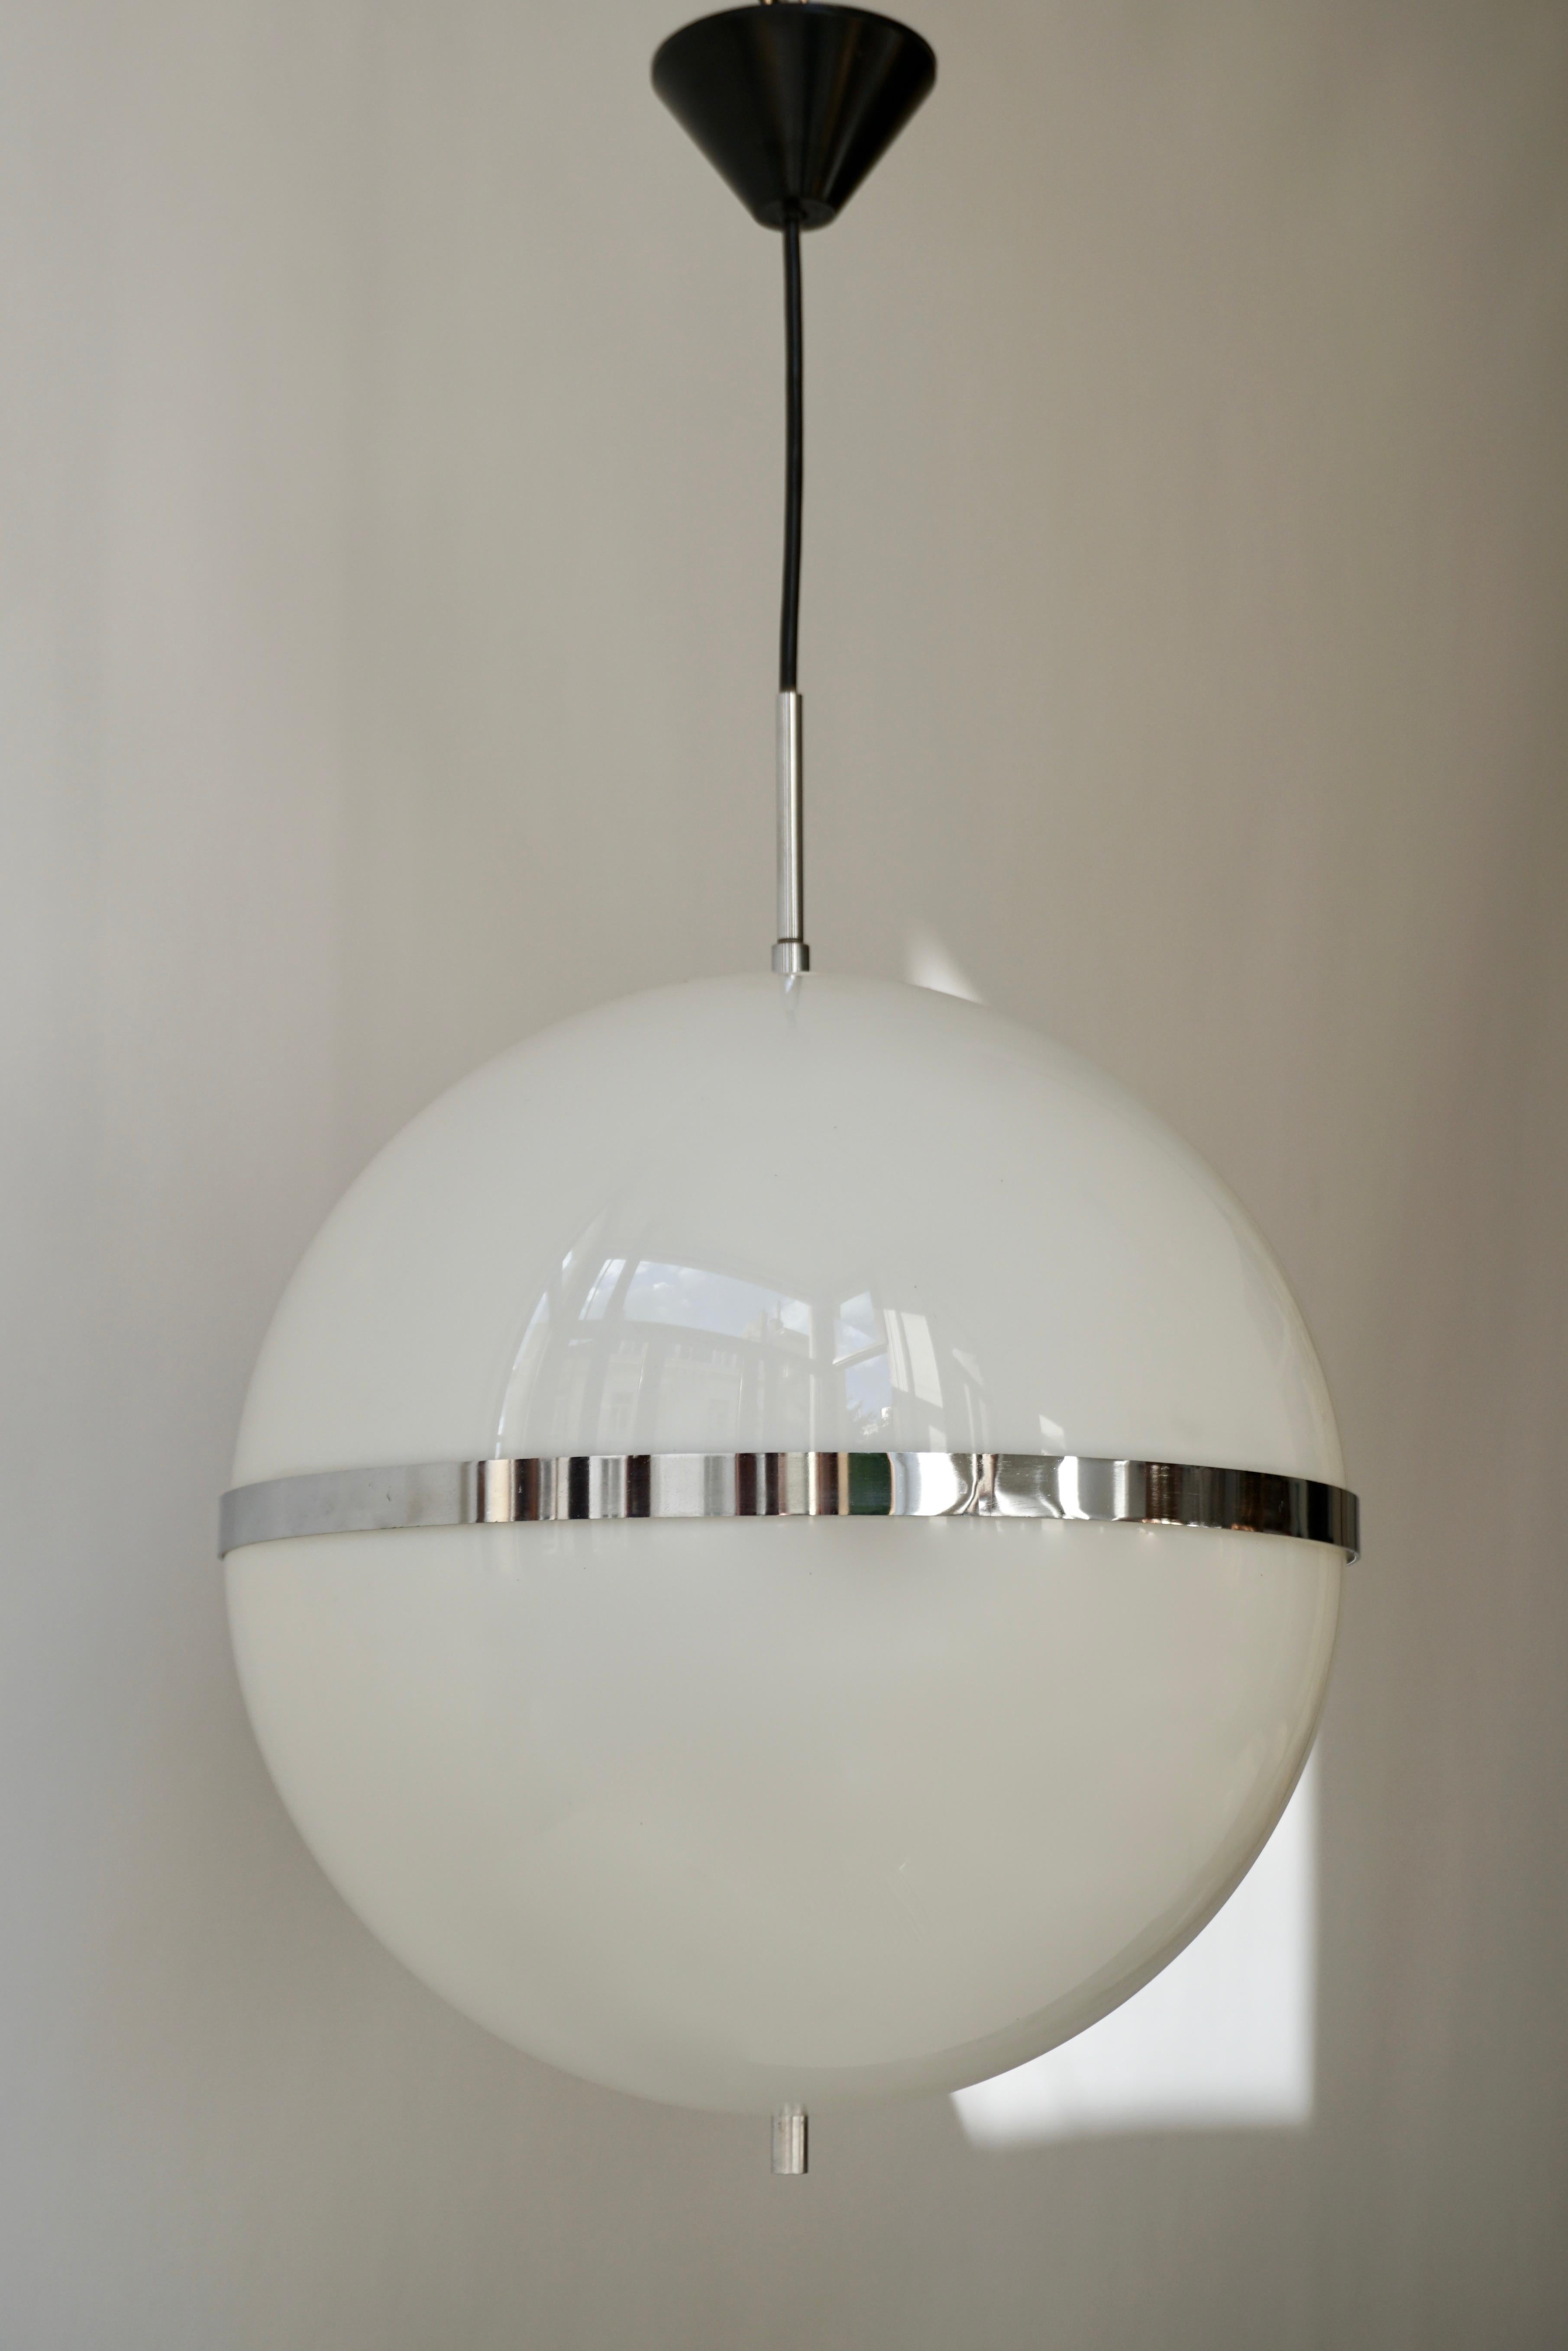 Italian Pendant Lamp in White Plastic and Chrome, 1970s For Sale 4